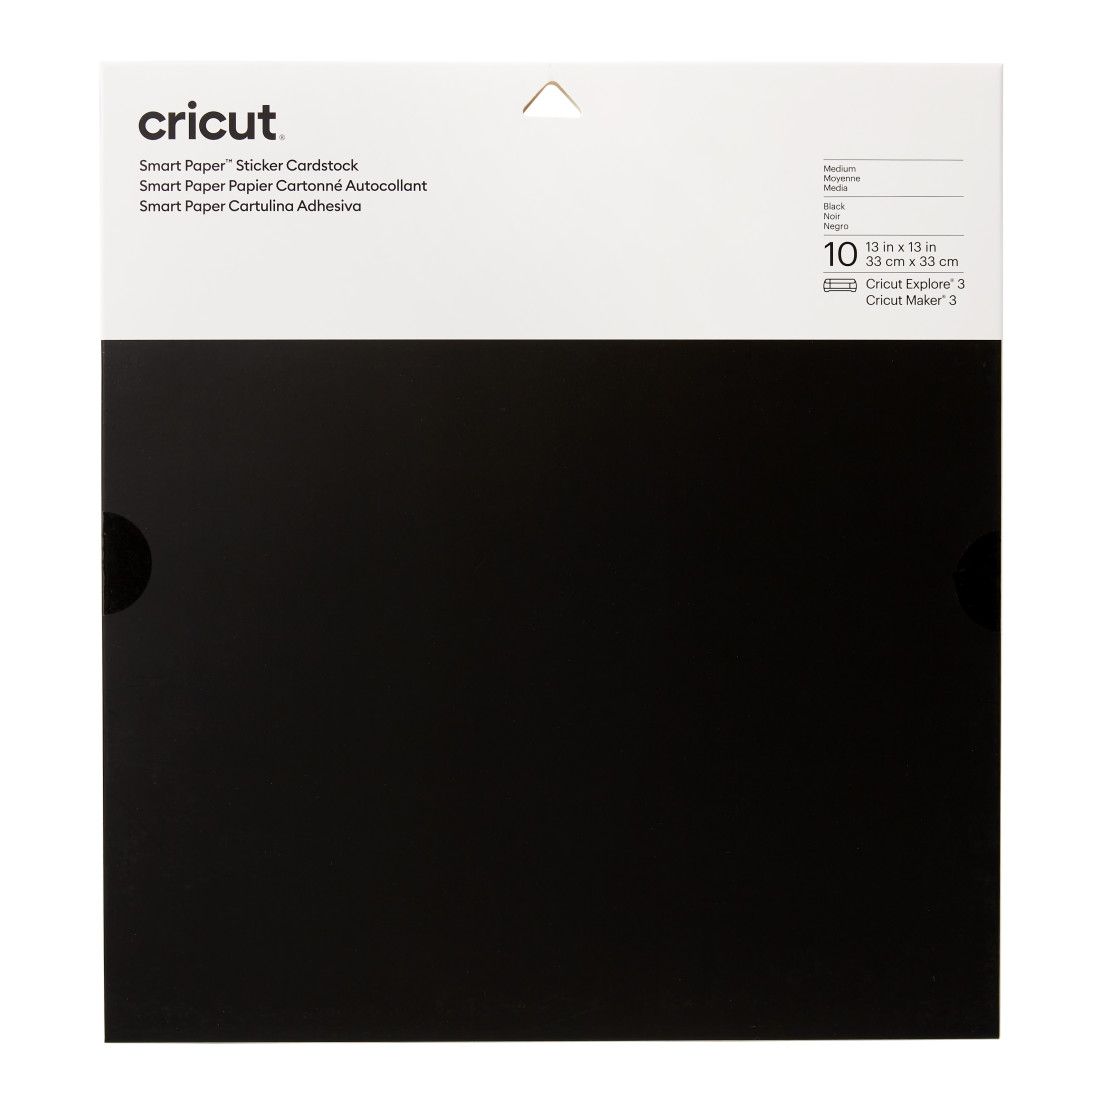 Cricut Smart Paper Sticker Cardstock (Black)